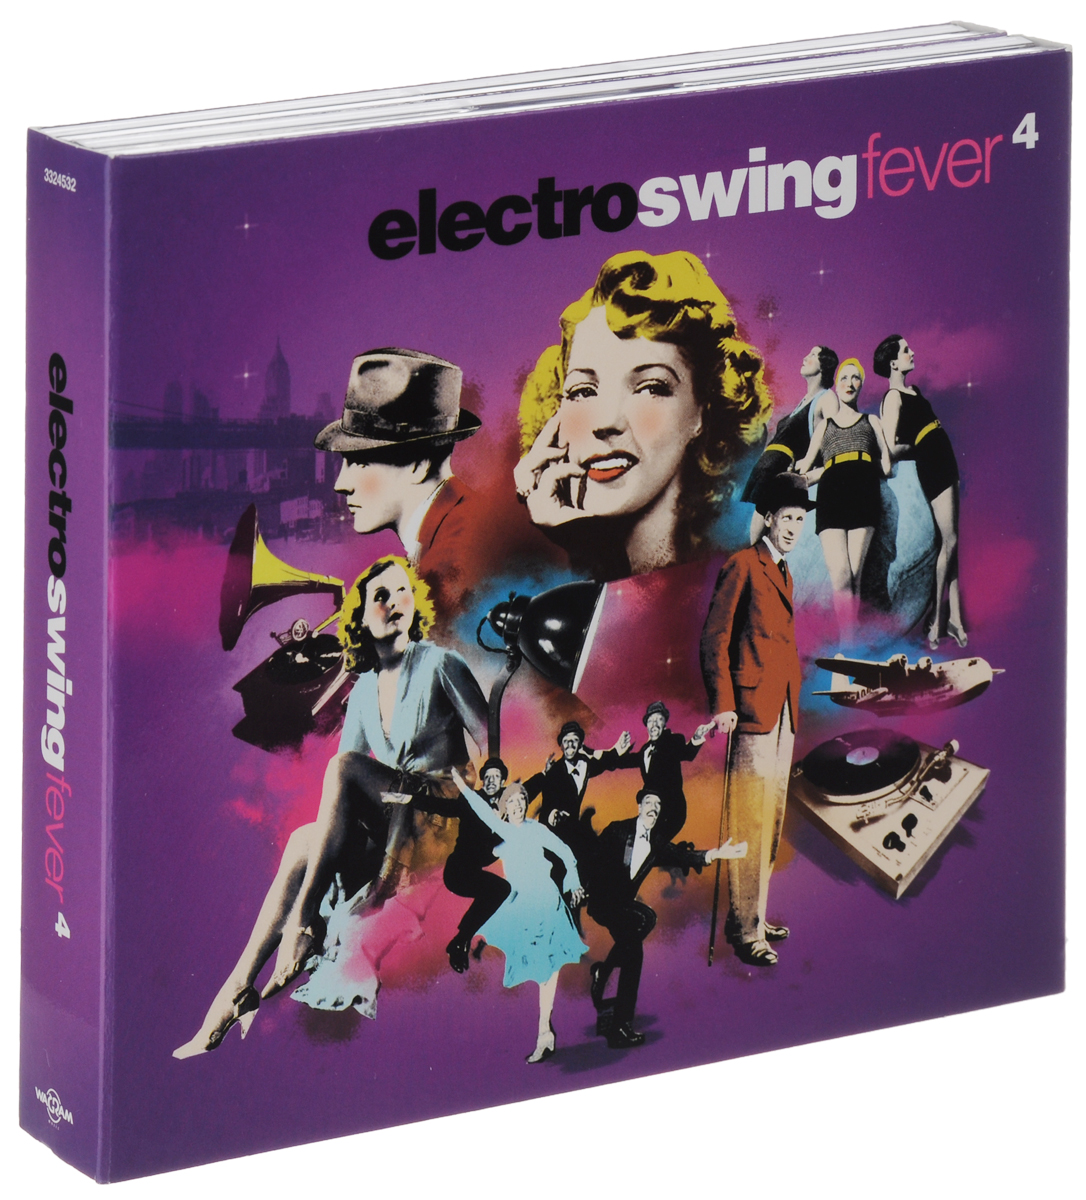 Electro Swing Fever 4 (4 CD)